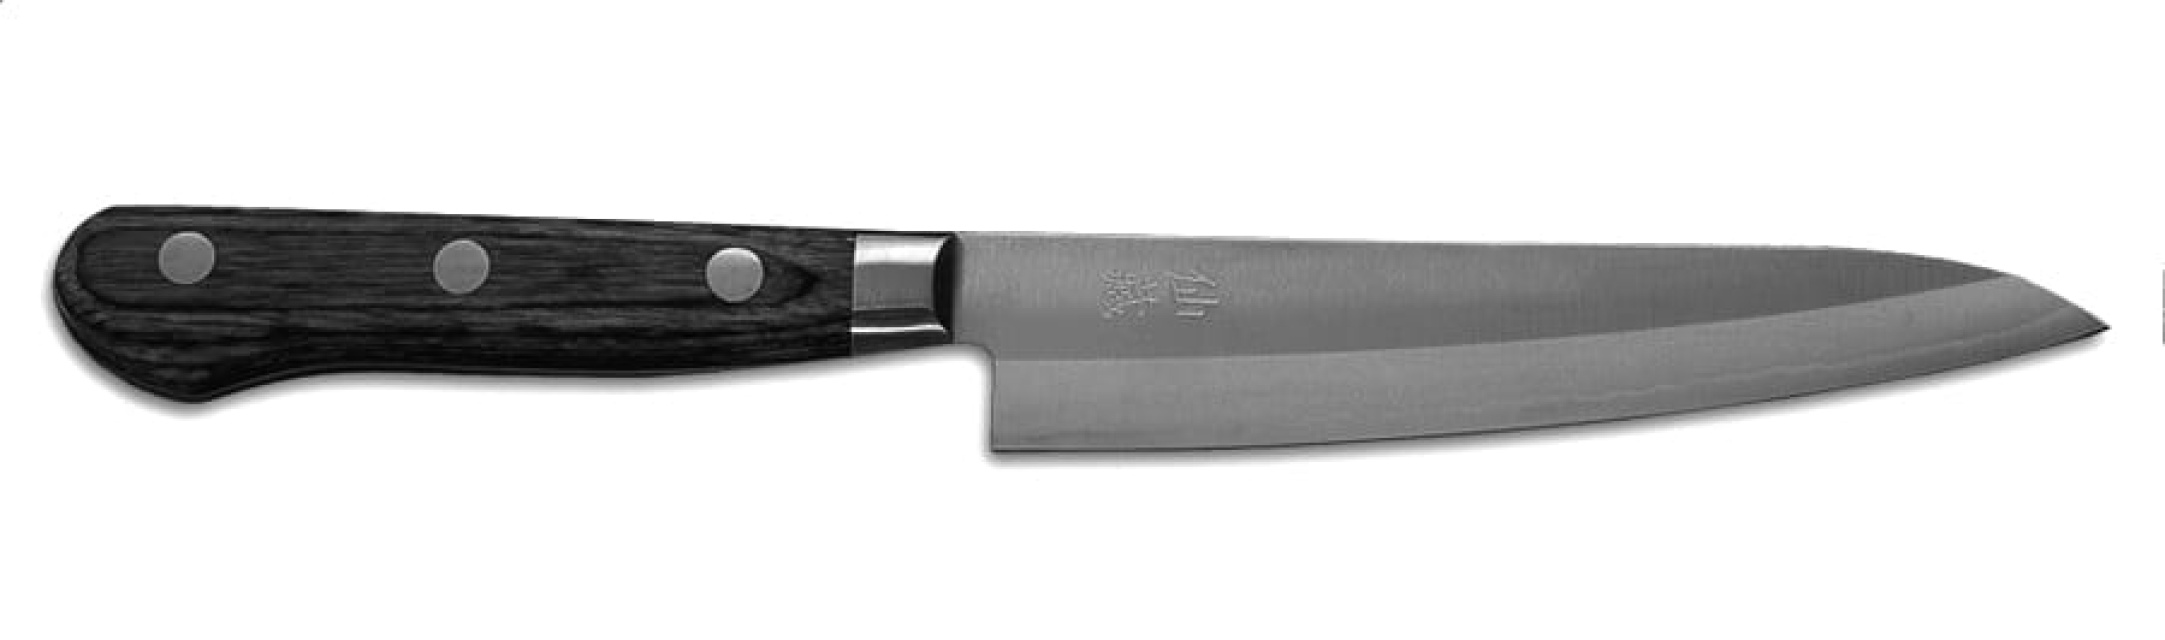 Nóż uniwersalny, 13,5 cm - Suncraft Warikome